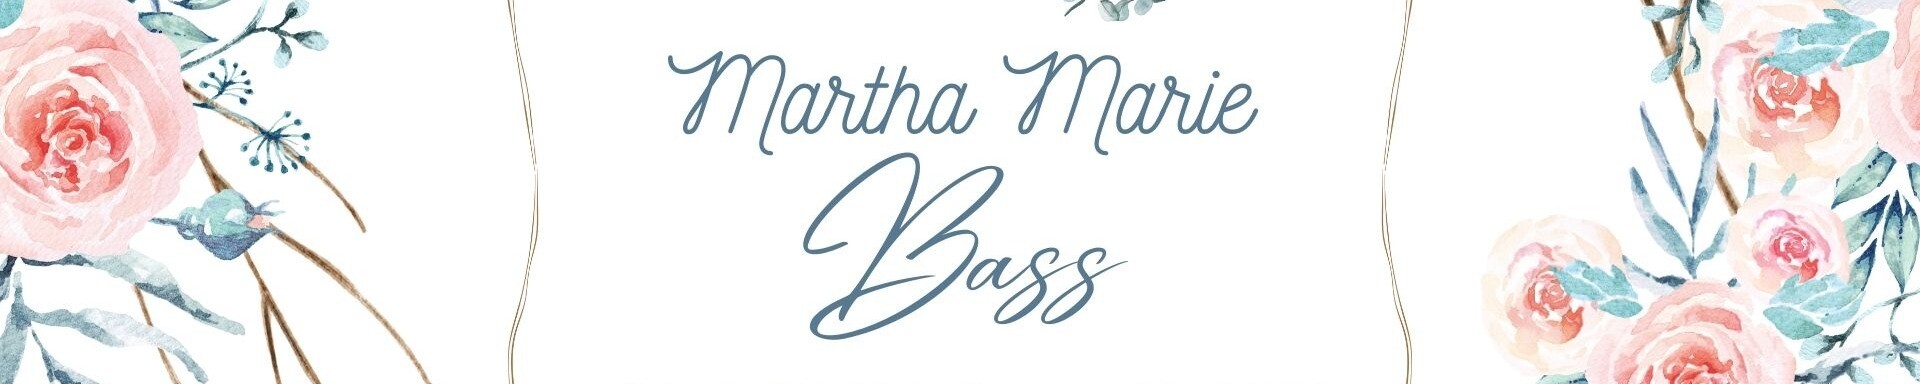 Cover photo for Martha Marie Bass's Obituary